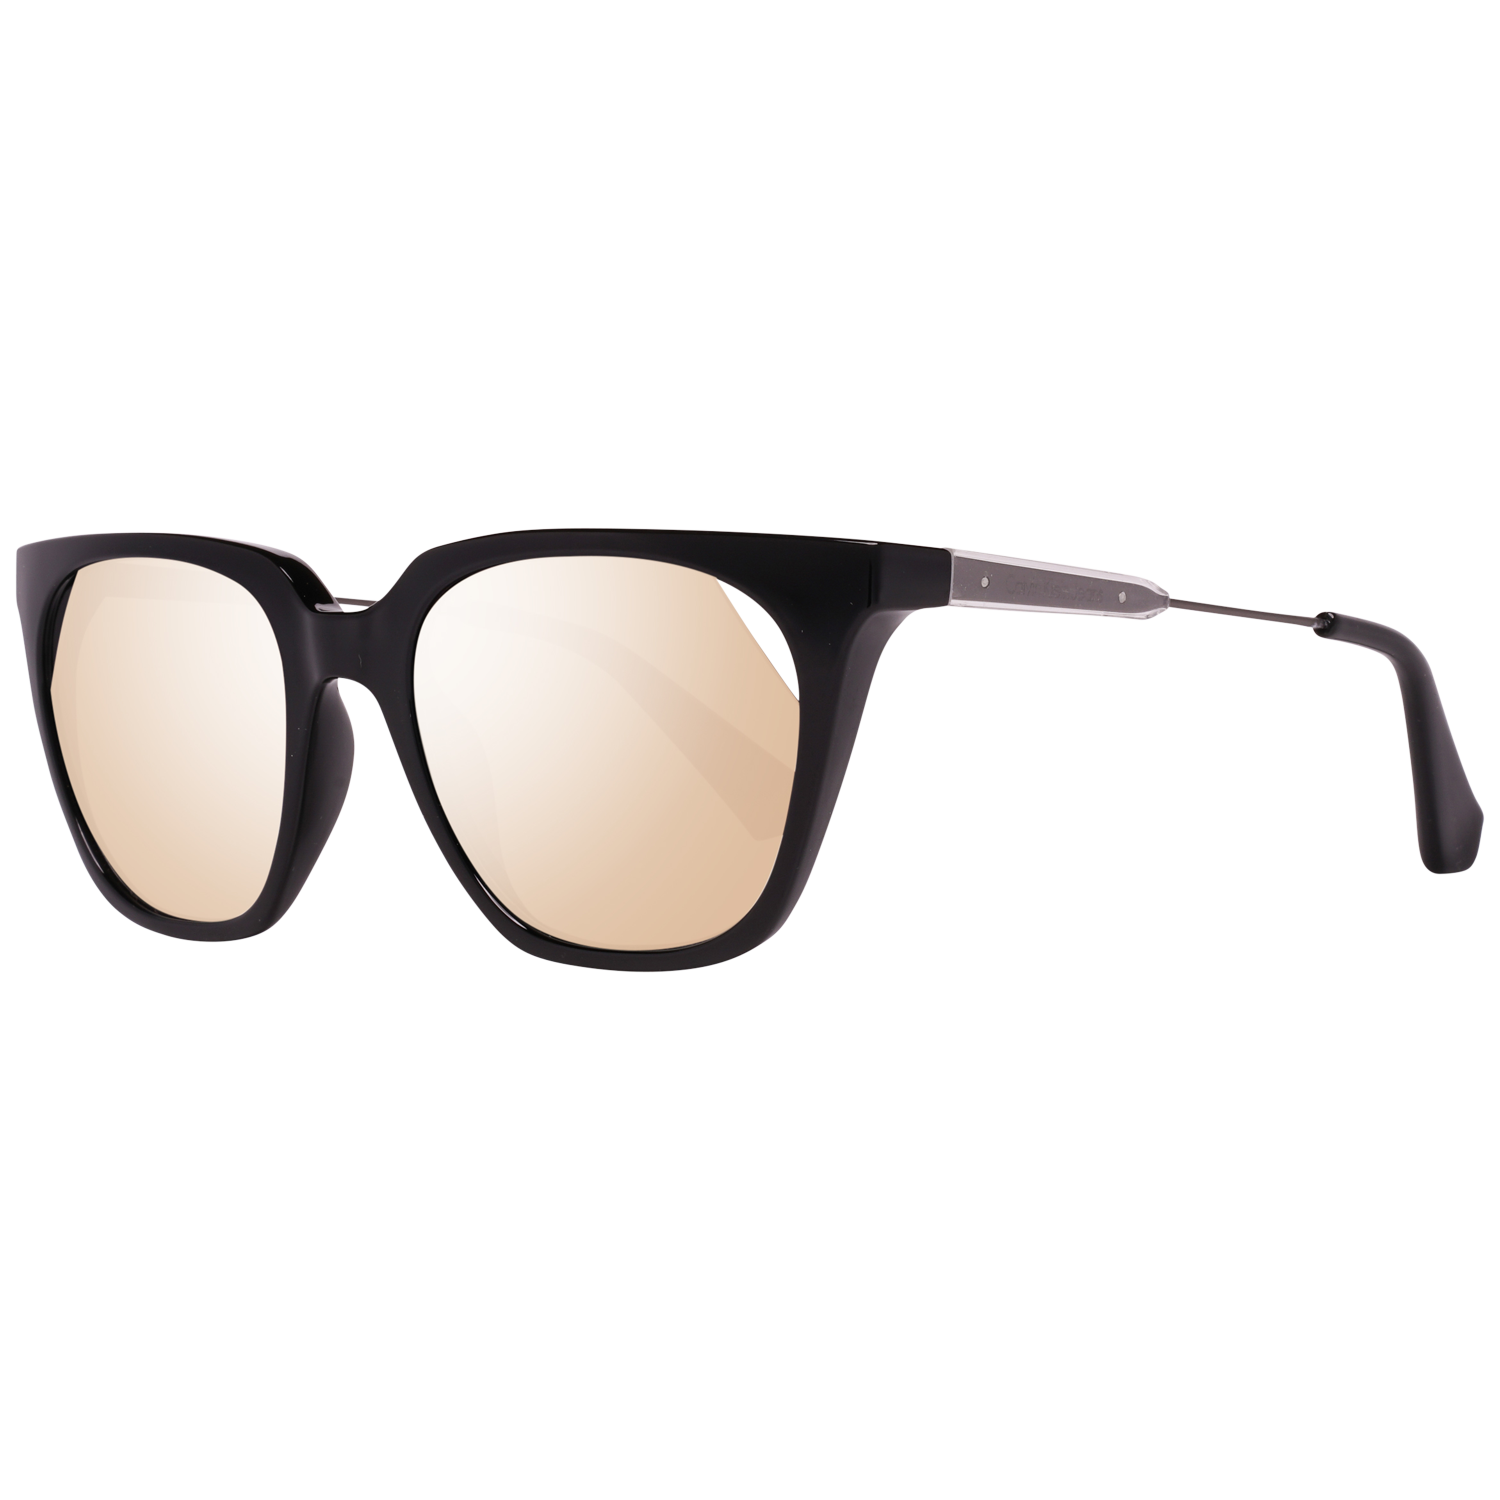 Calvin Klein Sunglasses CKJ509S 001 51